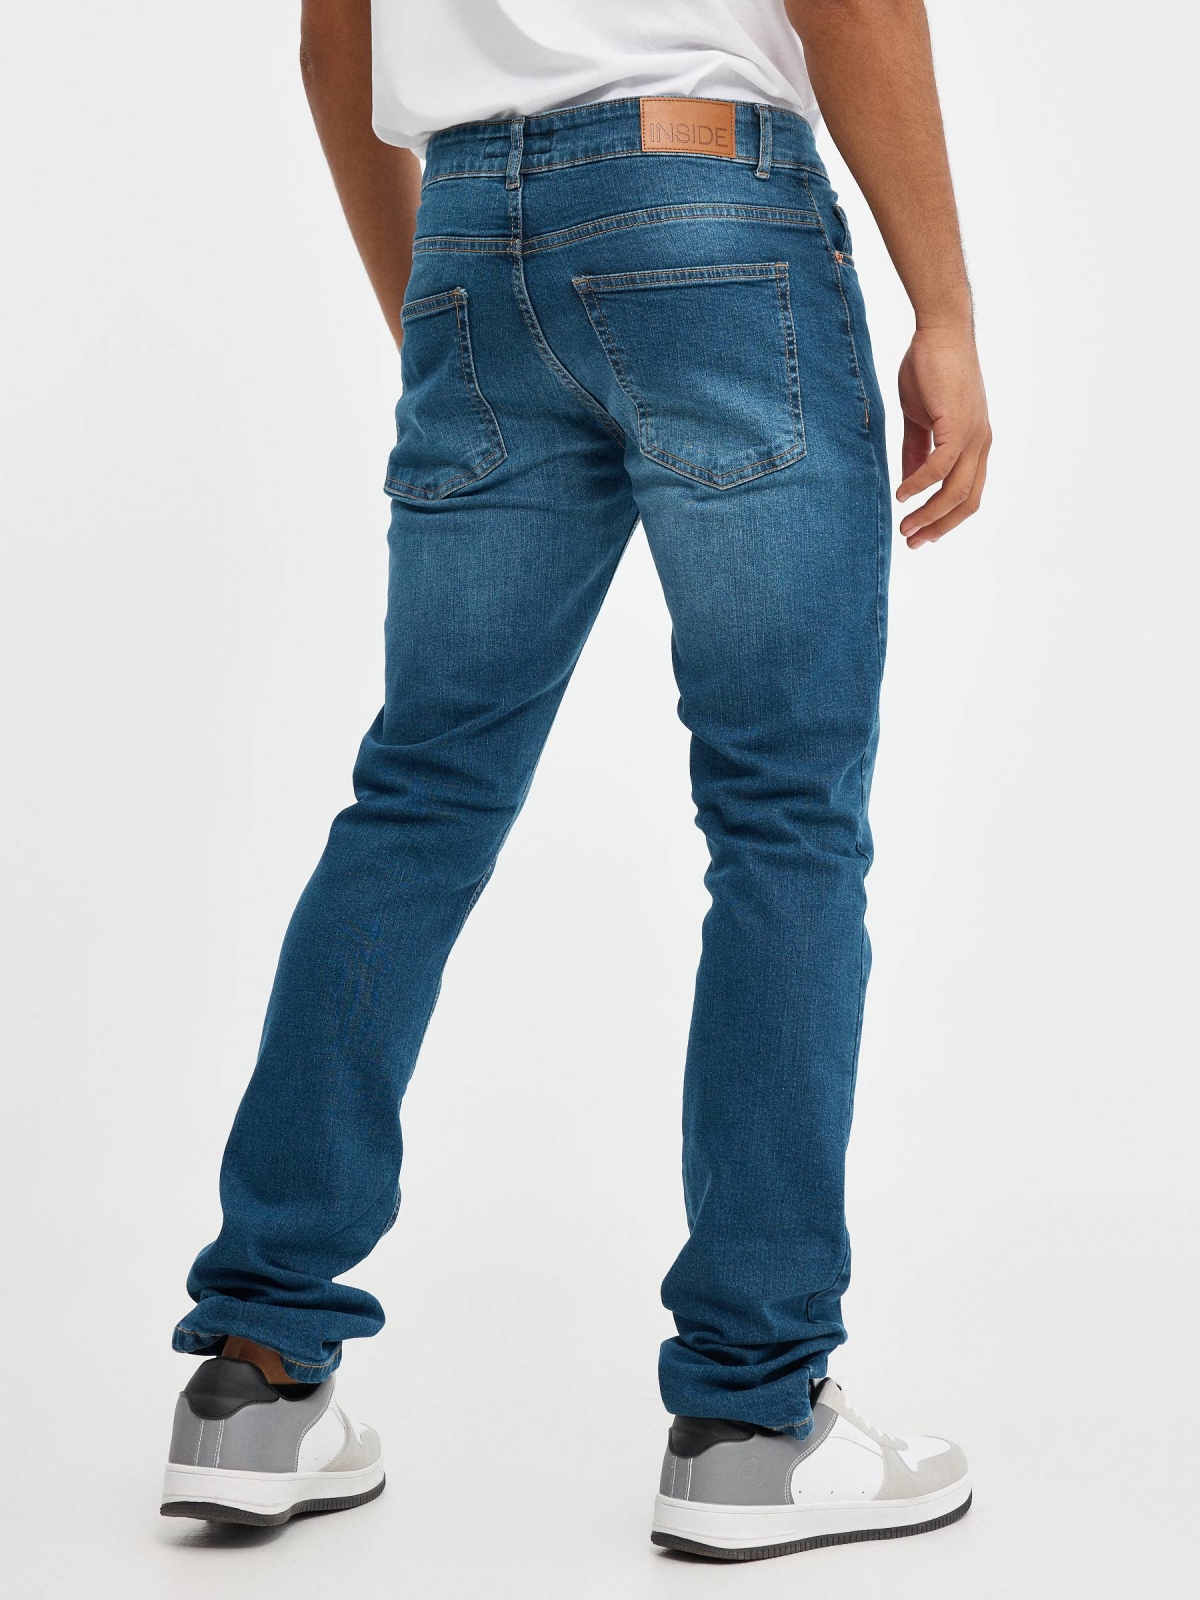 Regular basic jeans blue middle back view